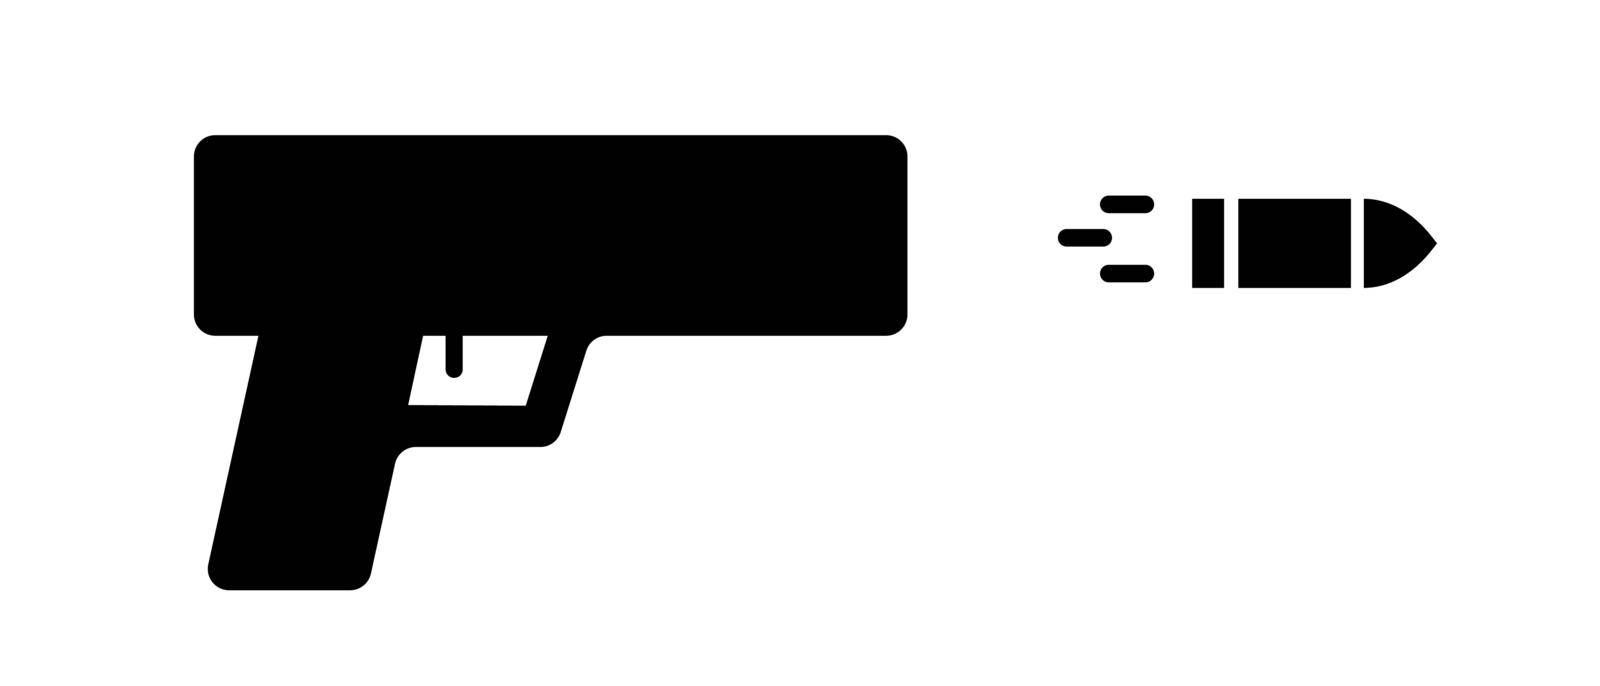 Gun and bullet silhouette icon. Gunfire. Editable vector.